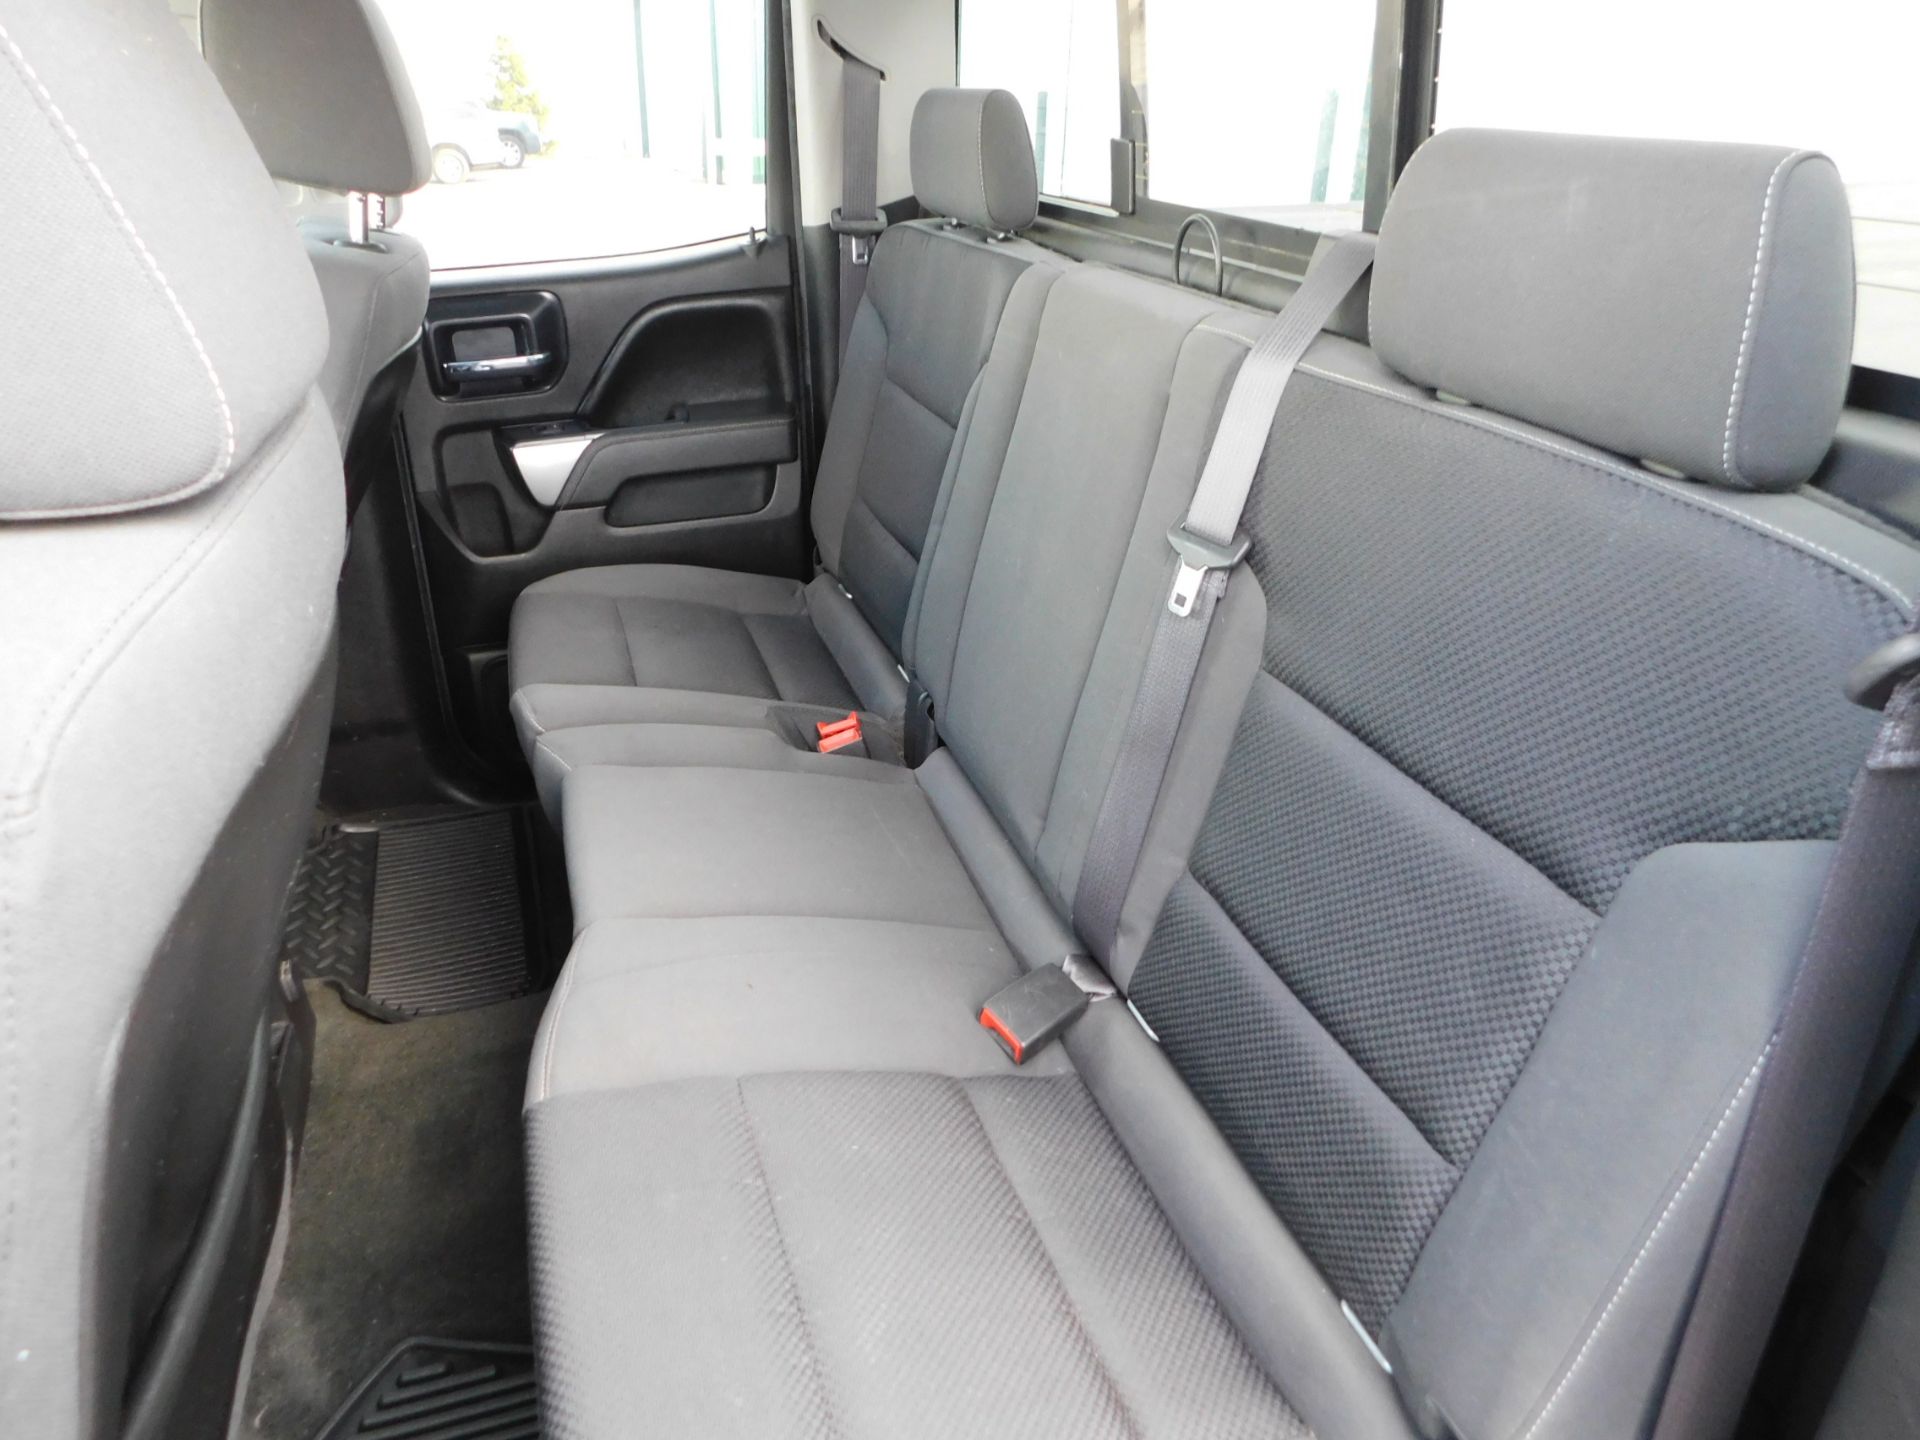 2014 Chevrolet Silverado LT Pickup, VIN 1GCVKREC3EZ139405, 4-Door 4 WD, Automatic, AM/FM, AC, Cruise - Image 34 of 51